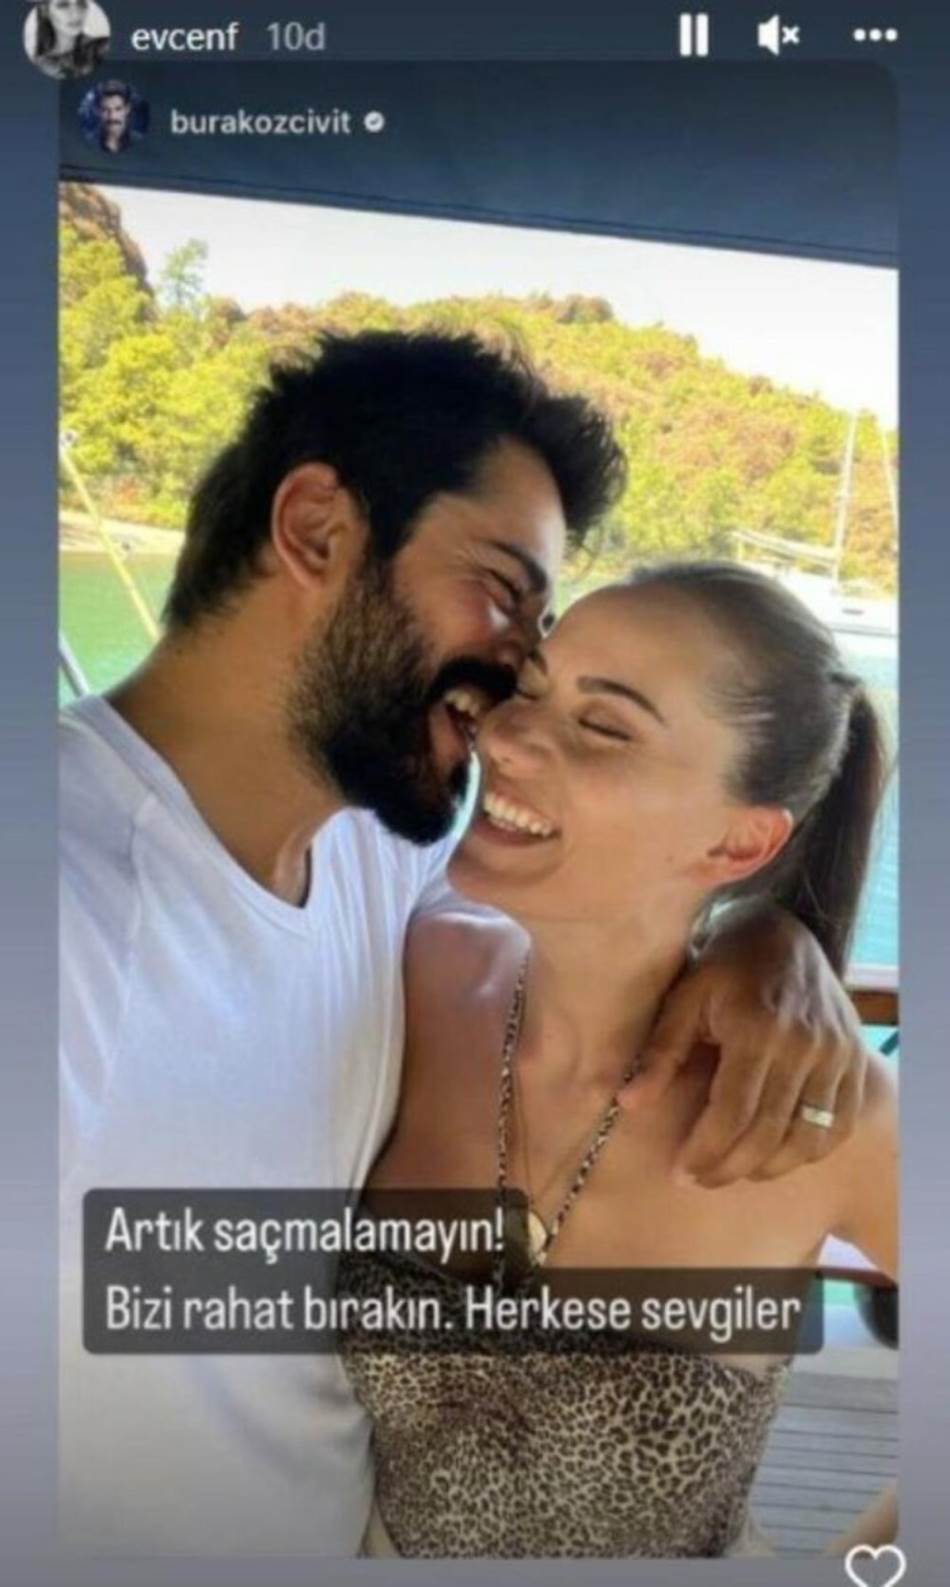 Fahriye Evcen i Burak Ozcivit oglasili su se na Instagramu o svađi